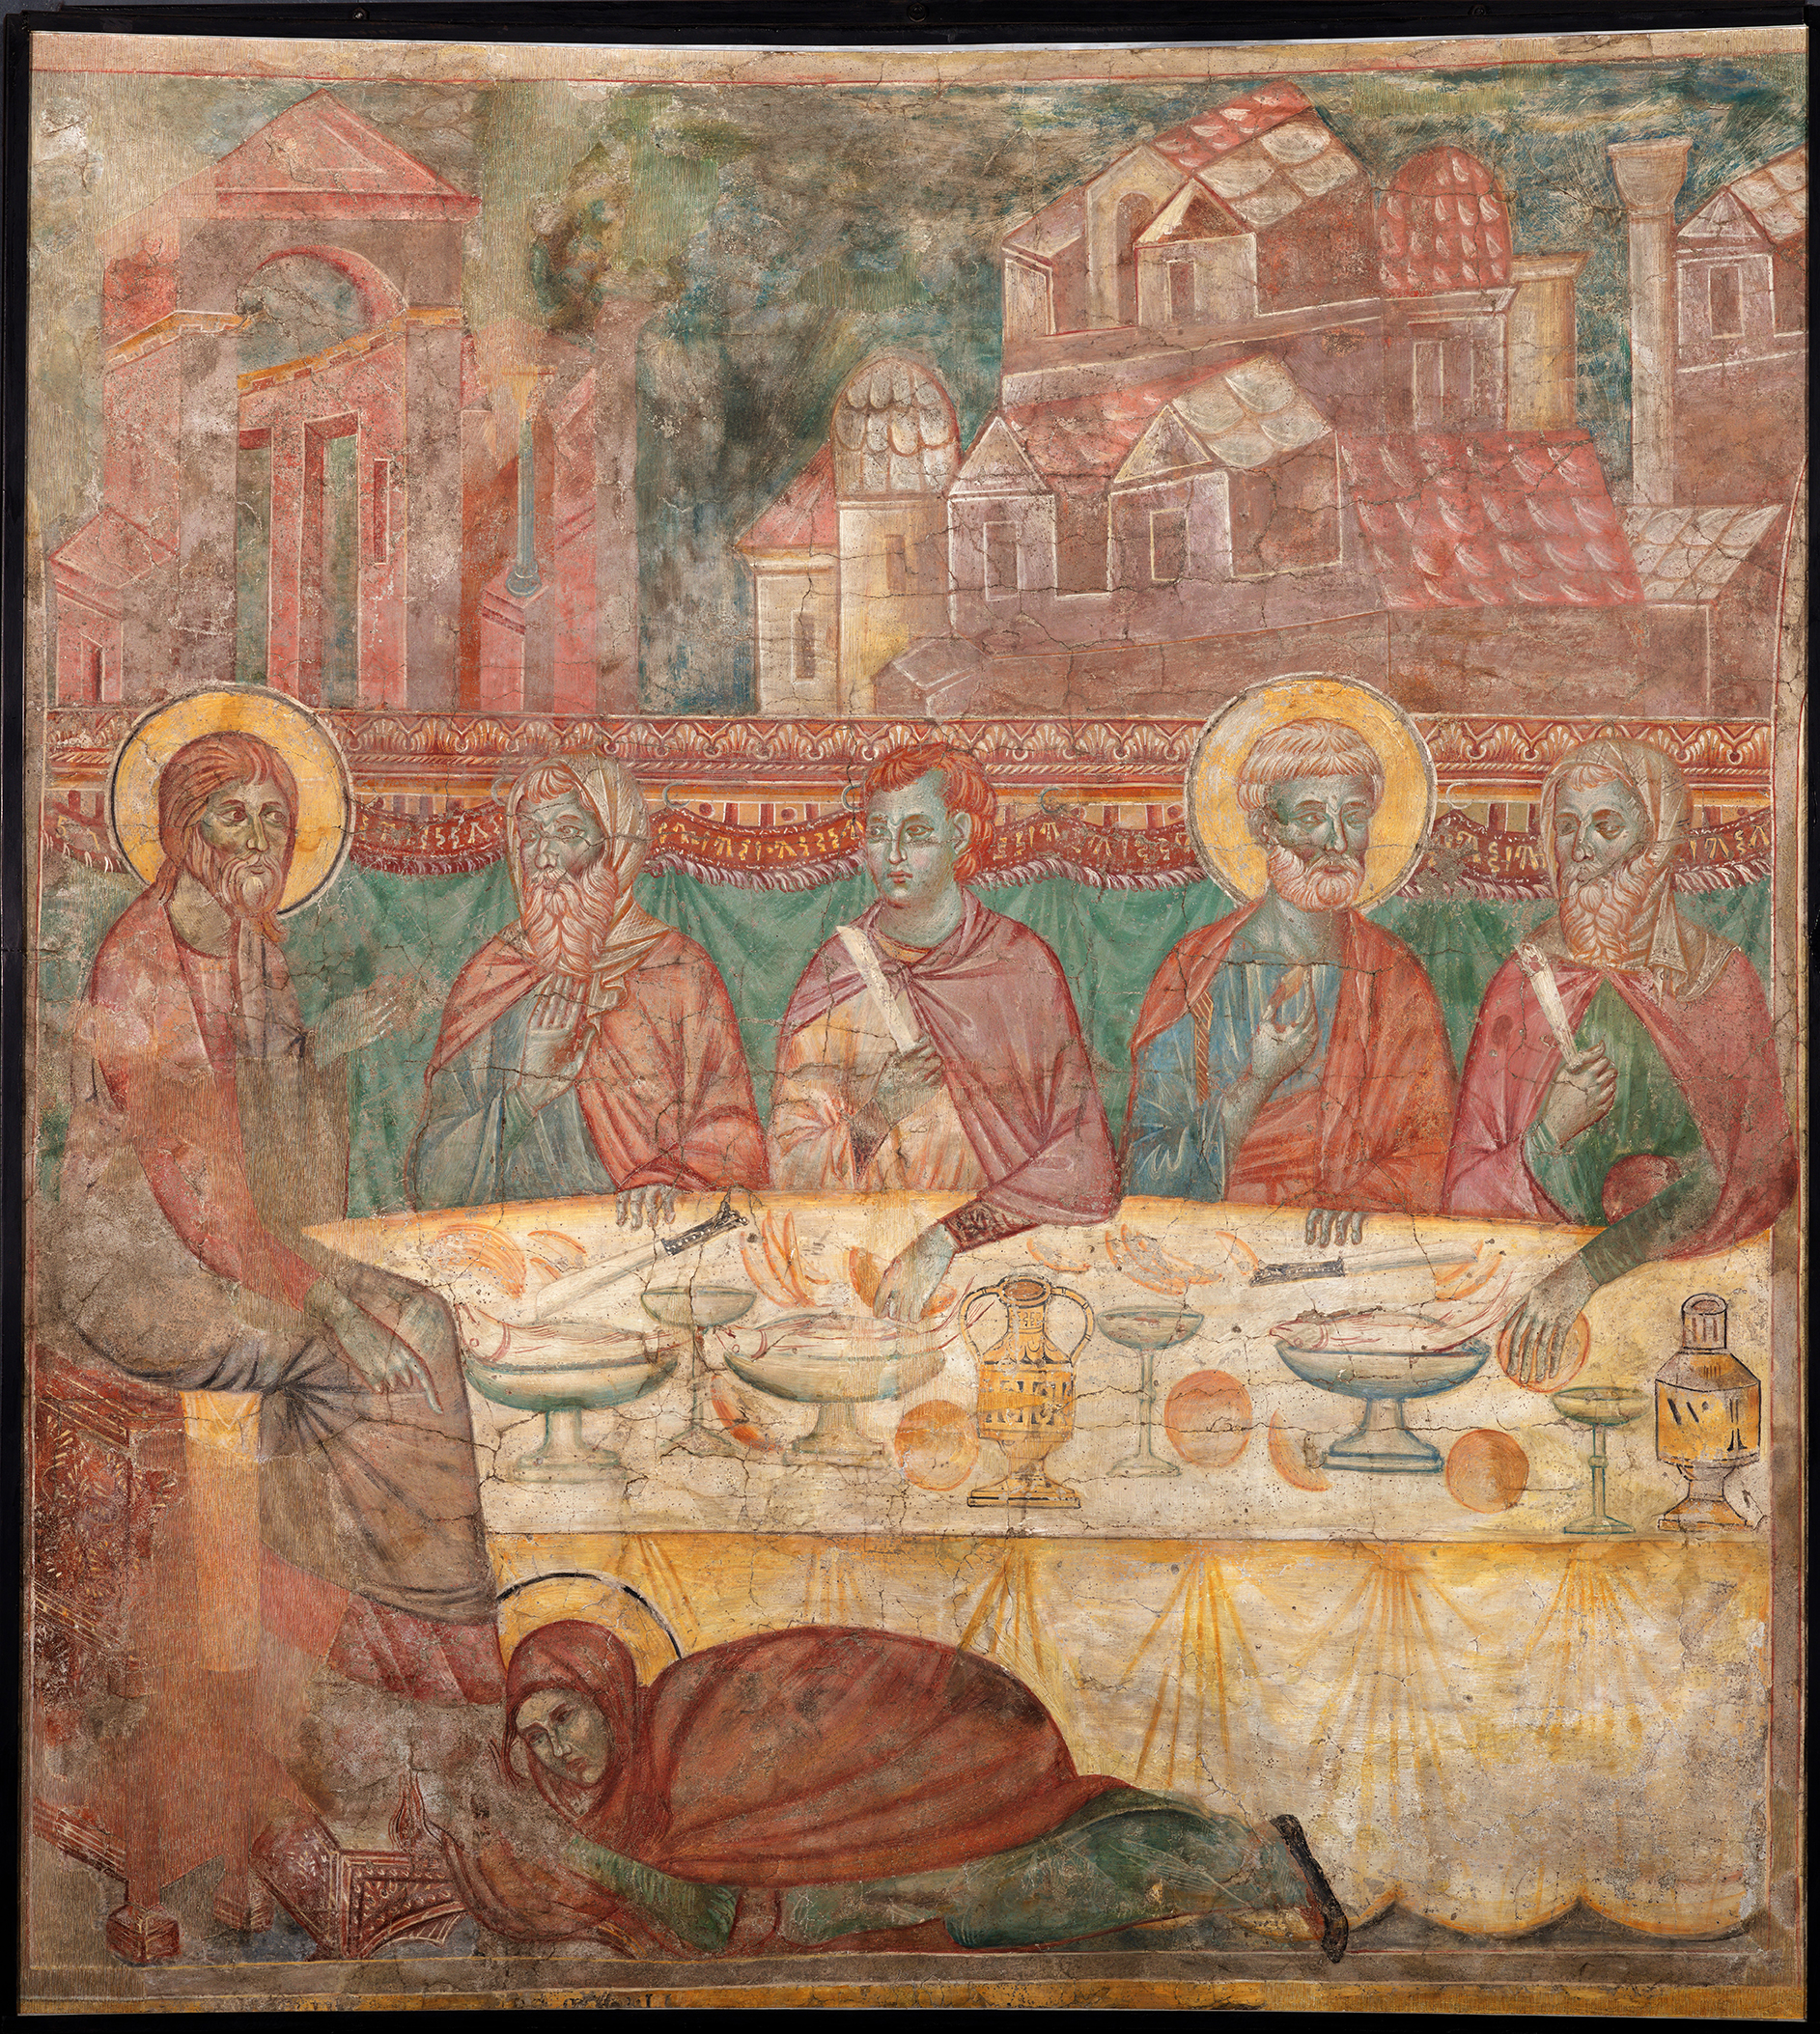 Manfredino da Pistoia, Fresco, "Supper in Simone's House"